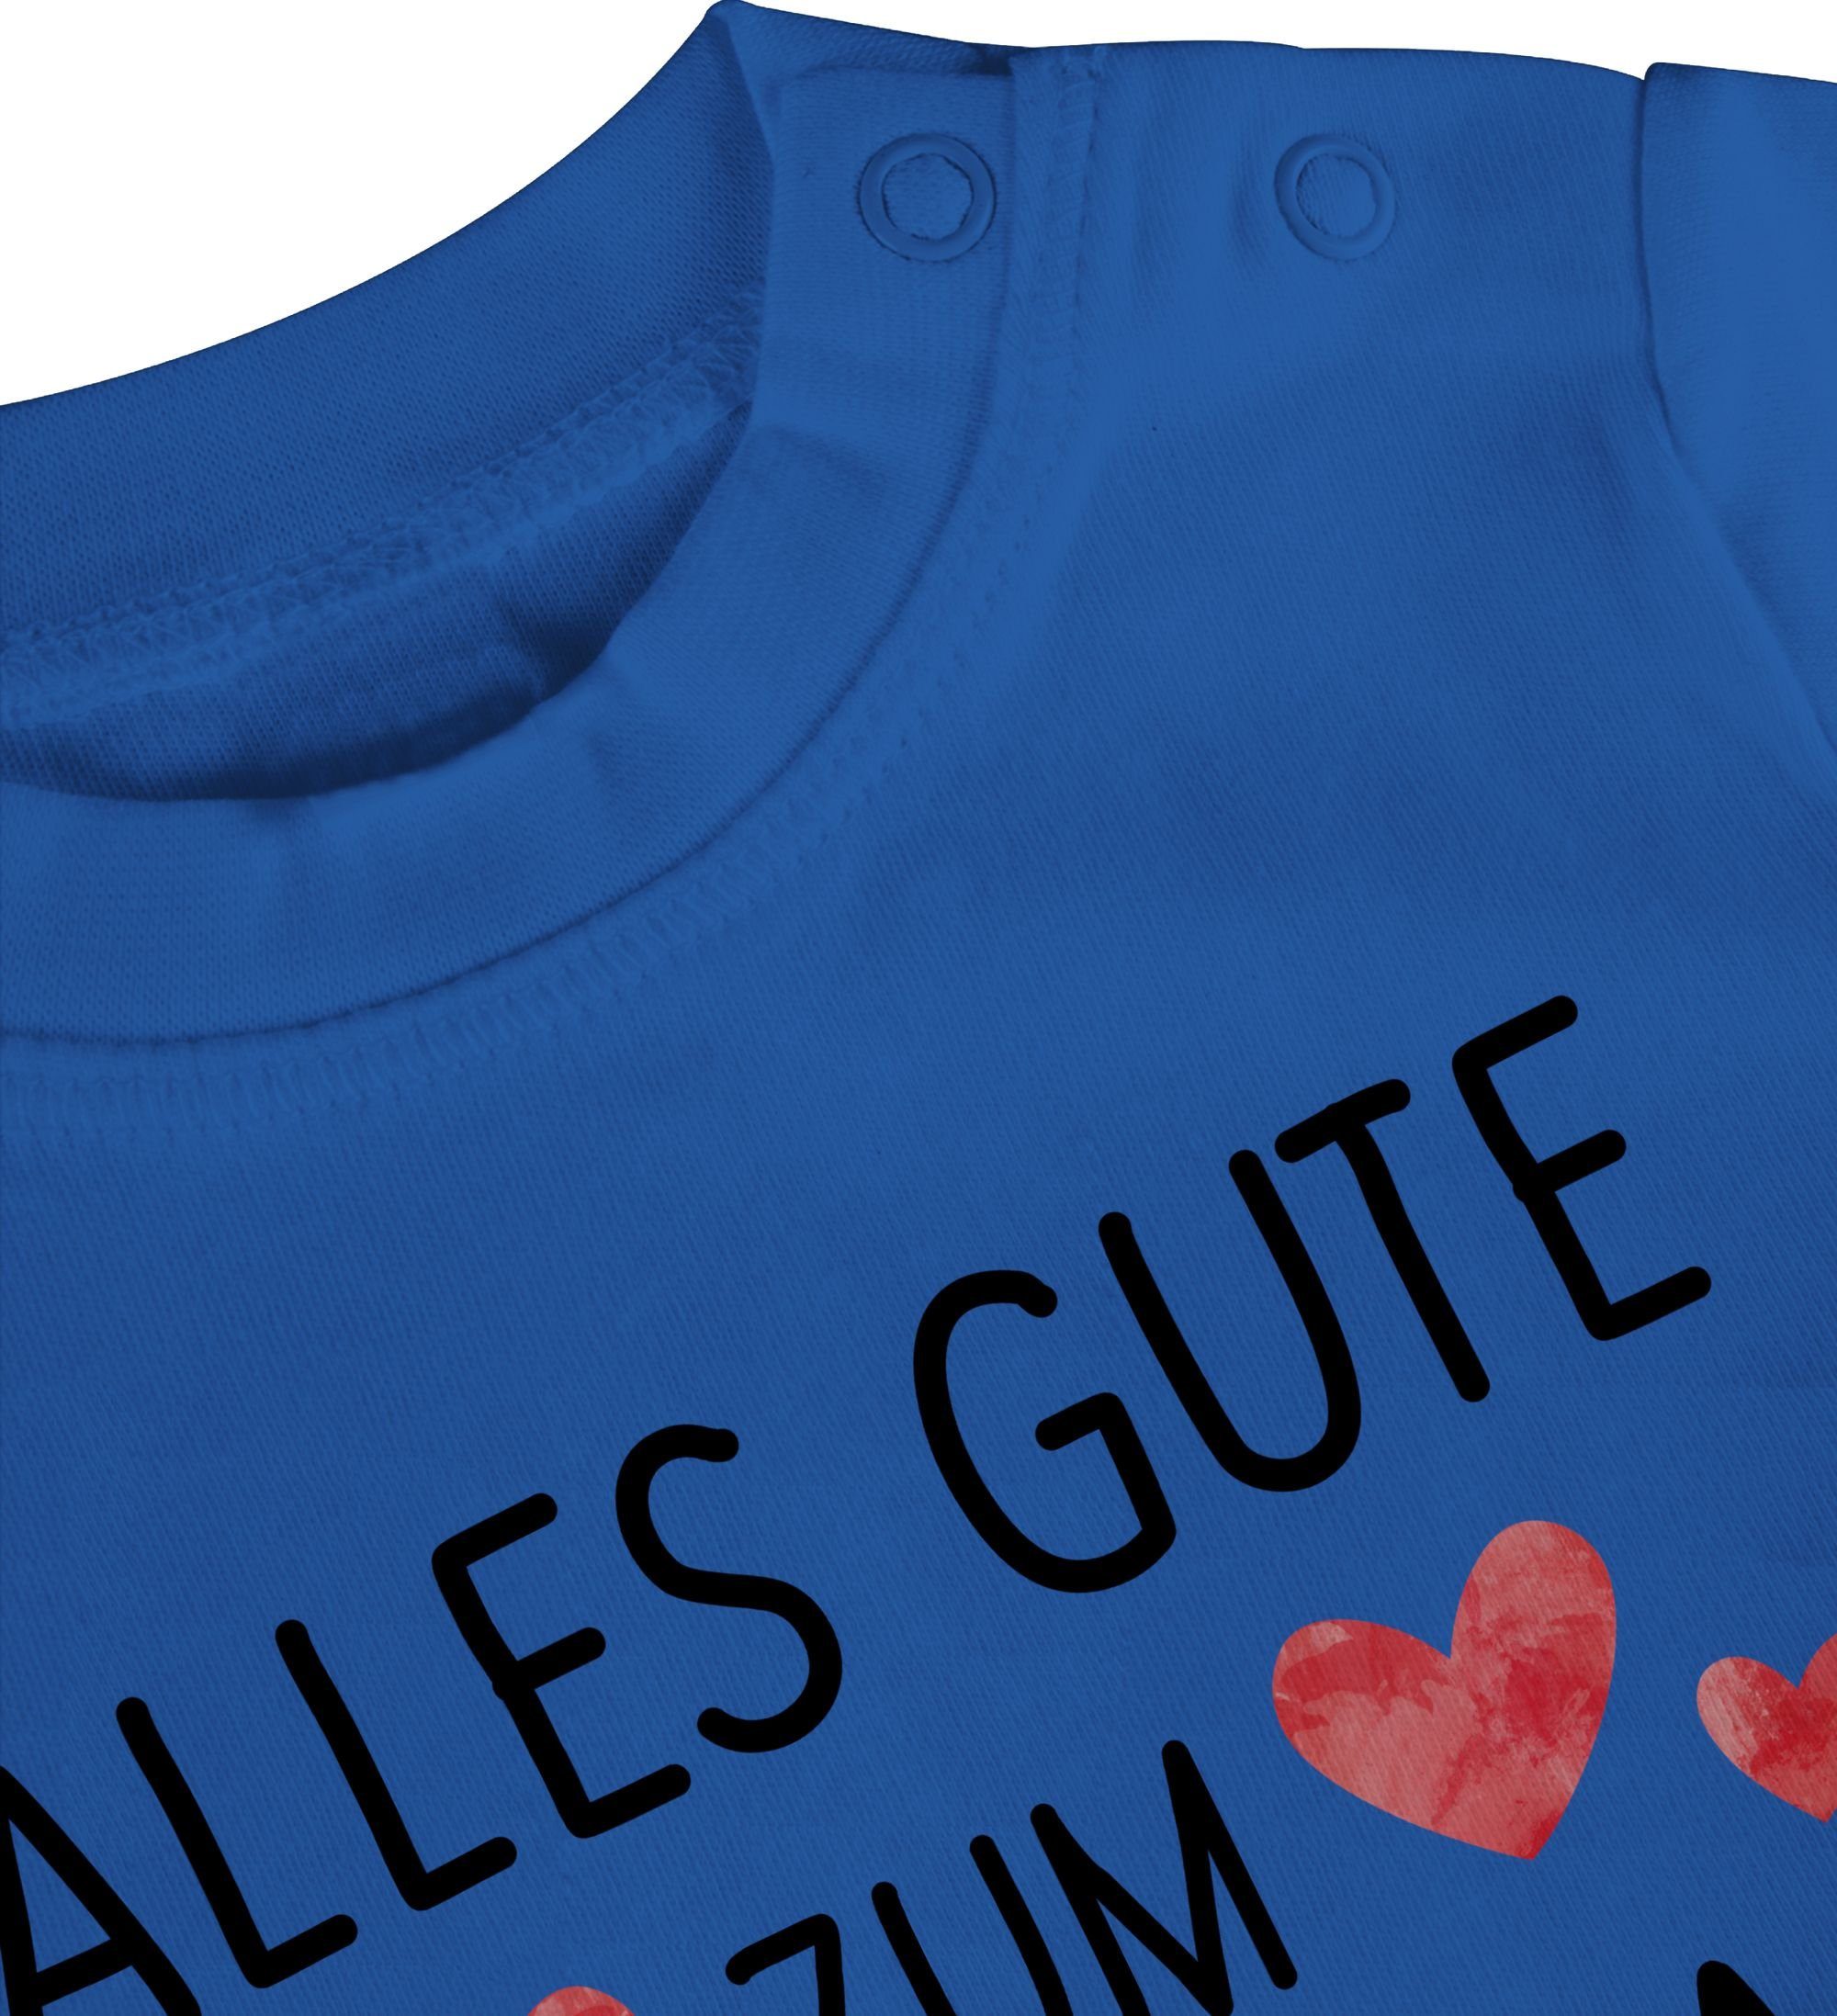 Royalblau Baby & Tochter Geschenk Shirtracer zum Alles T-Shirt Mama 3 Mama Sohn gute Geburtstag